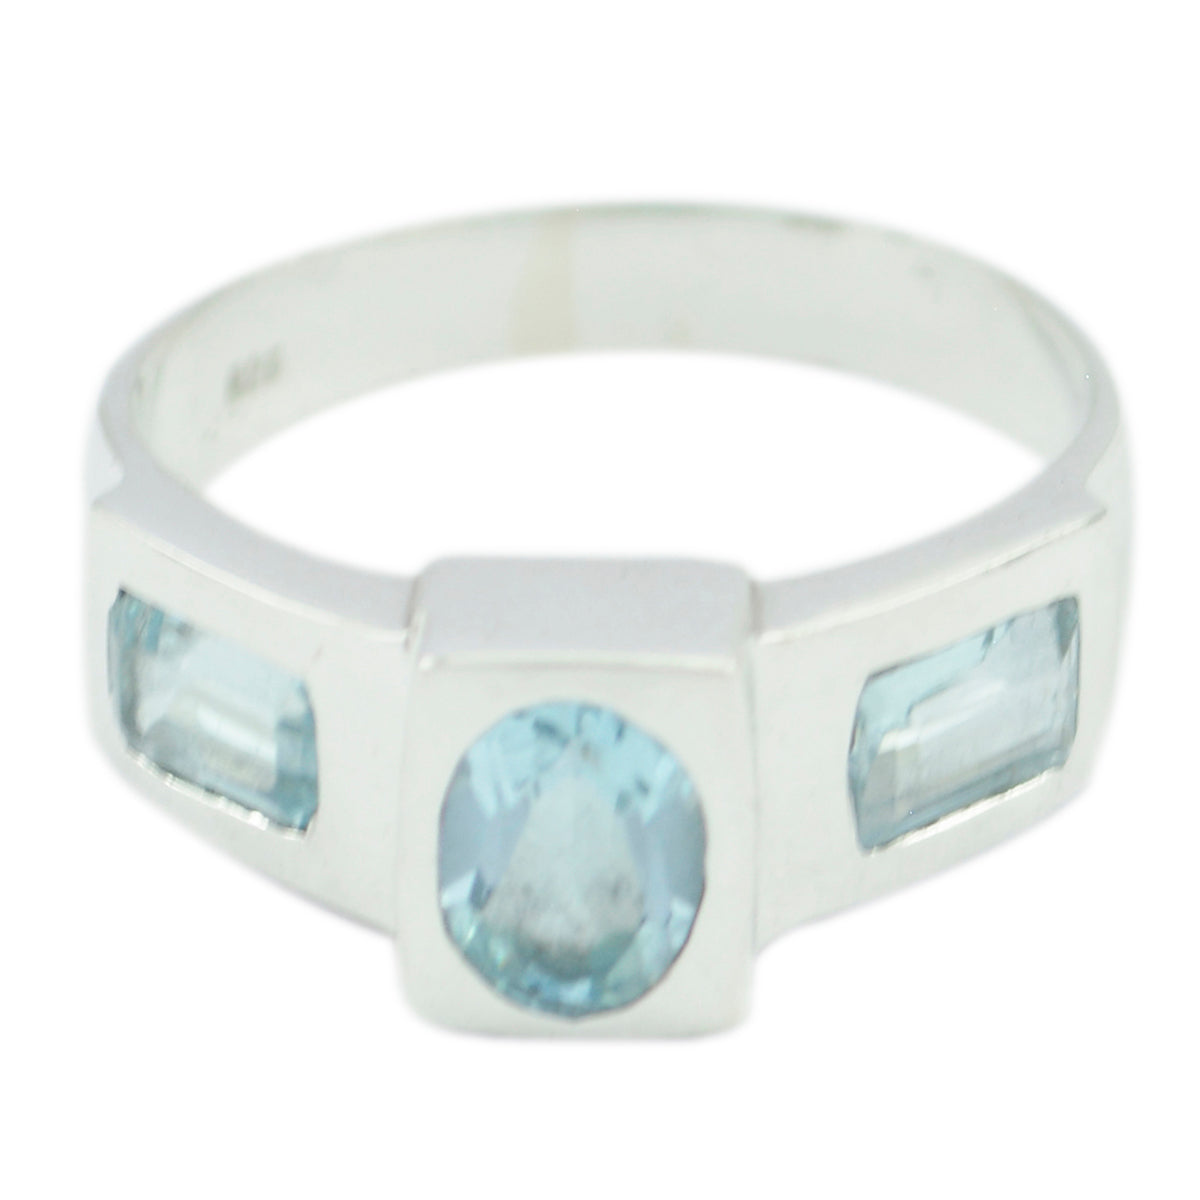 Riyo Splendiferous Stone Blue Topaz 925 Silver Ring Jewelry World